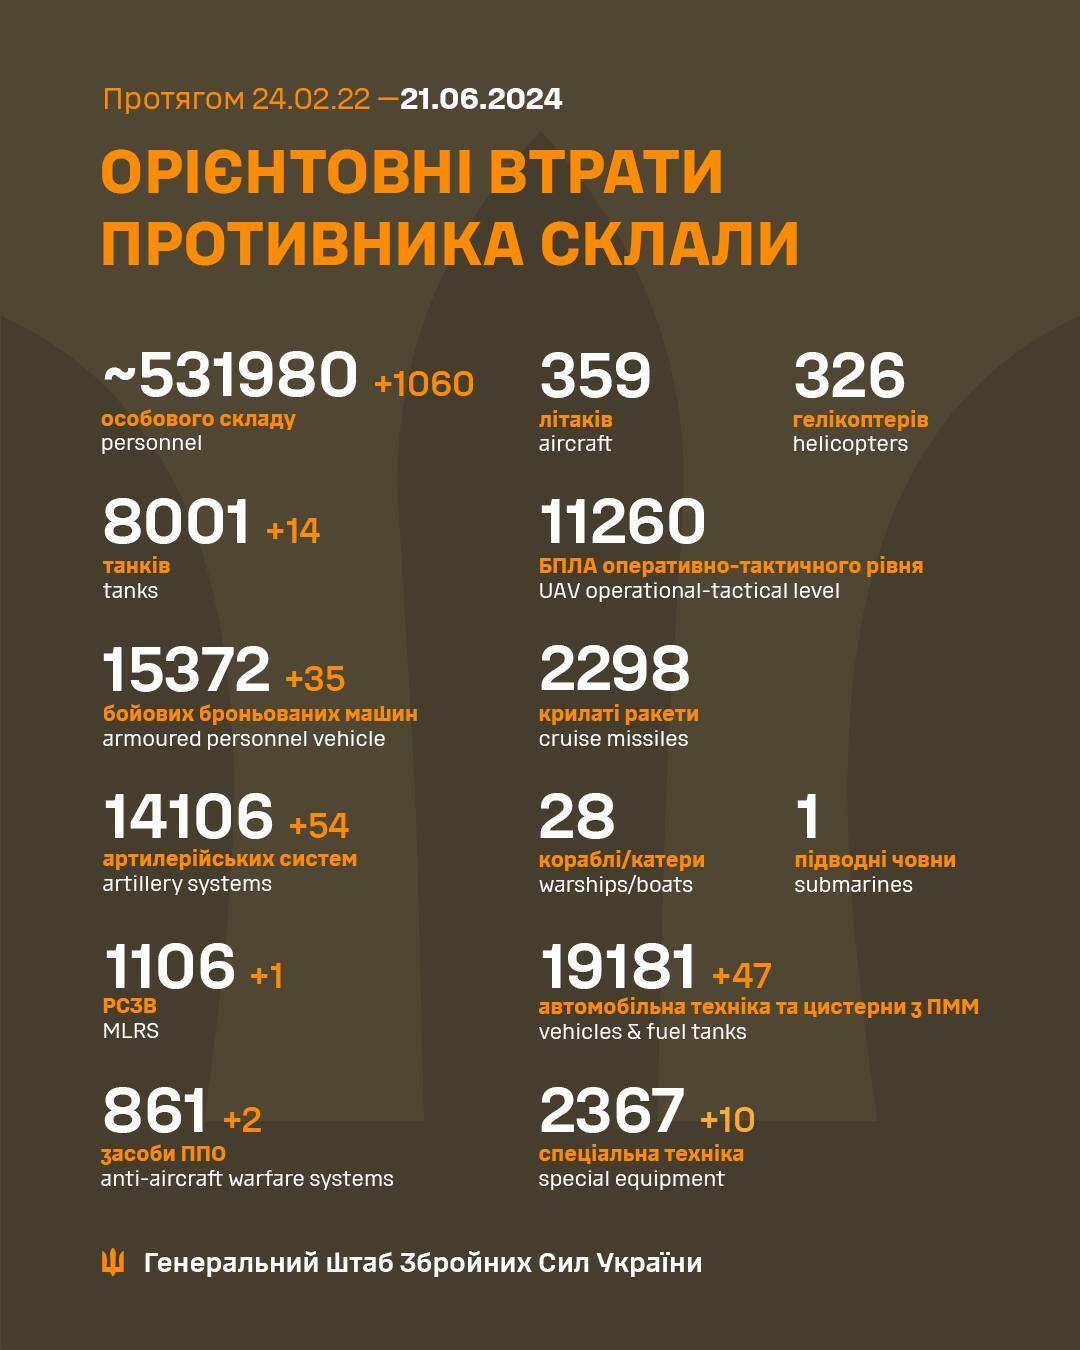 ВСУ обезвредили за сутки 1060 оккупантов и 35 бронемашин армии РФ – Генштаб